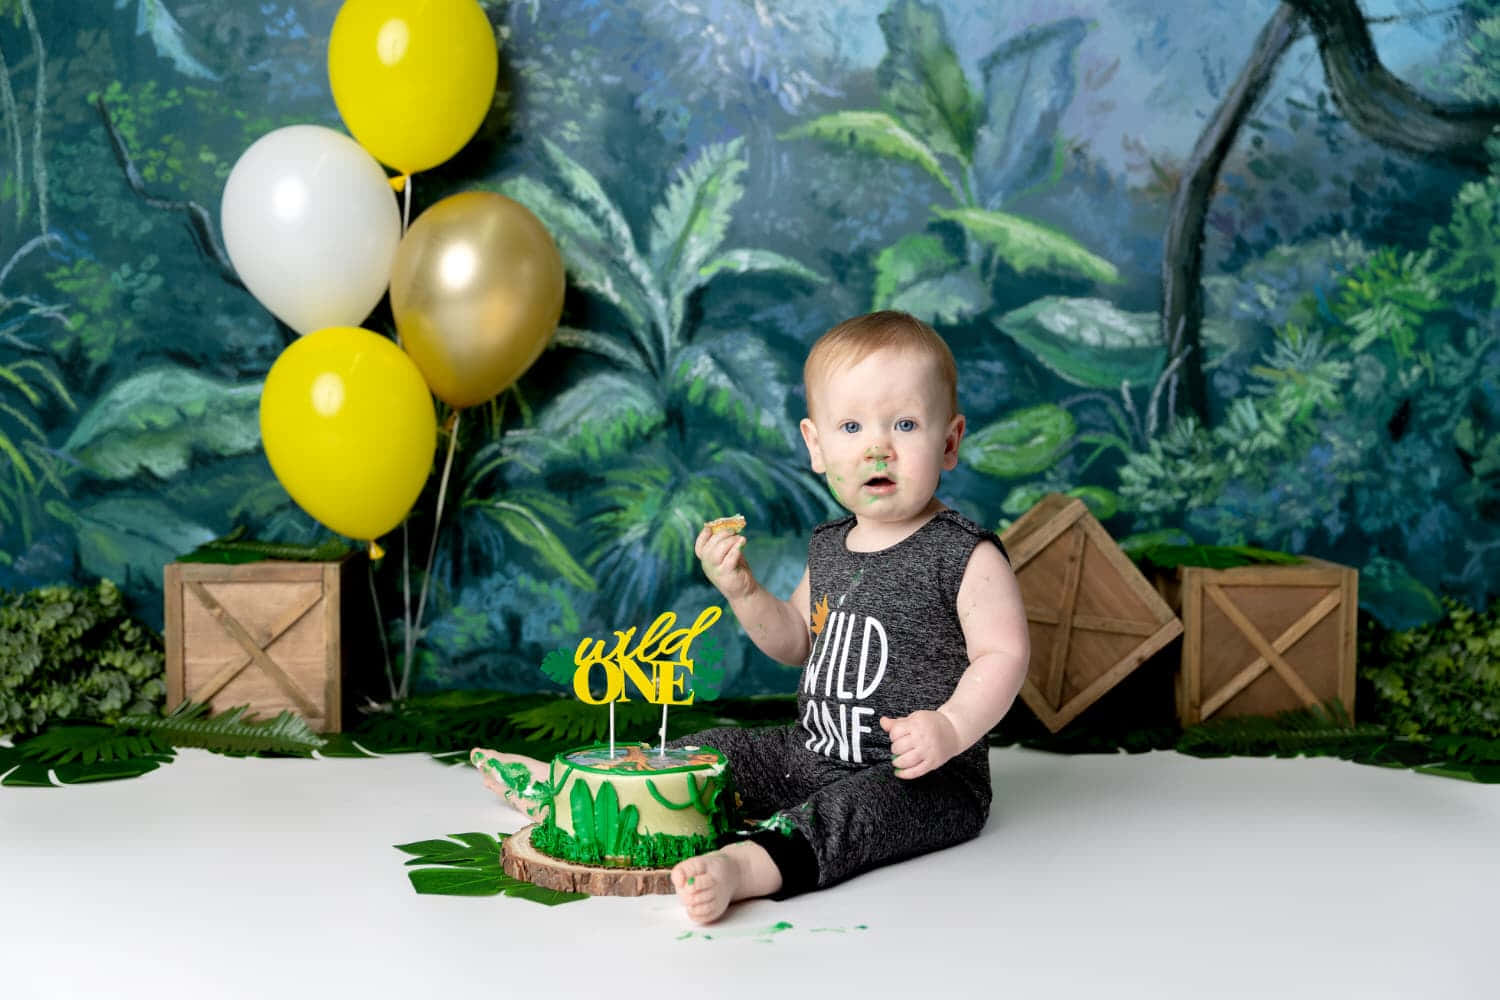 Adorable Toddler Enjoying Her Cake Smash Celebration